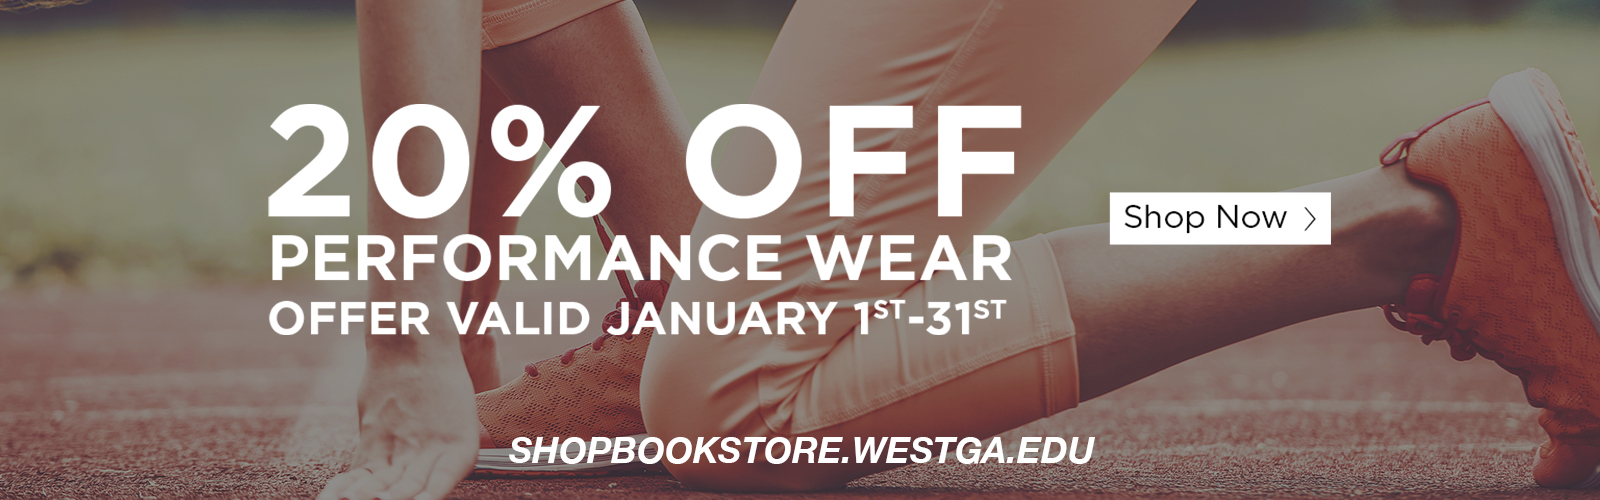 20% off performance wear until January 31st on shopbookstore@westga.edu .